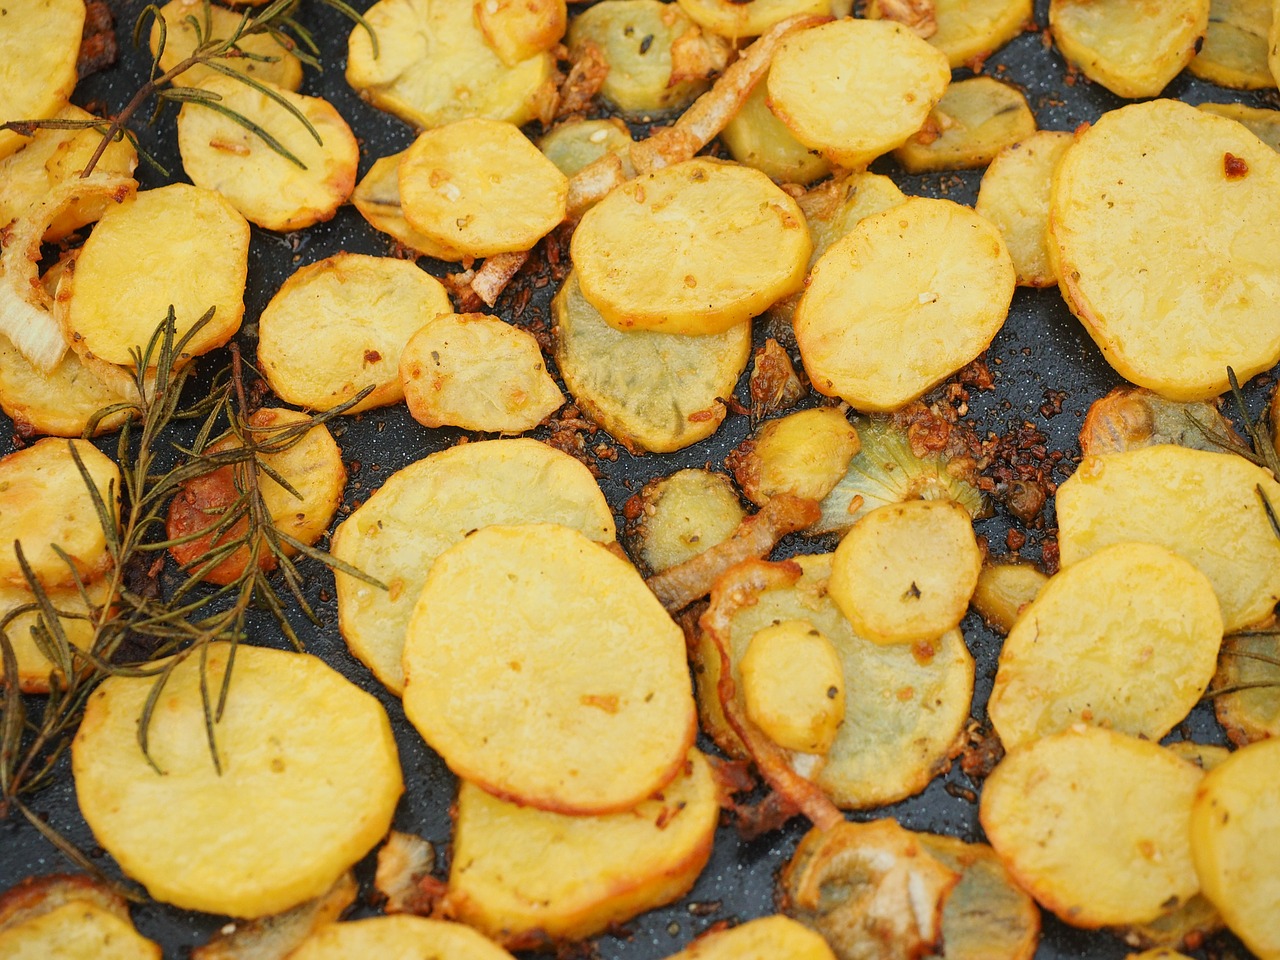 Crisp Onion-Roasted Potatoes